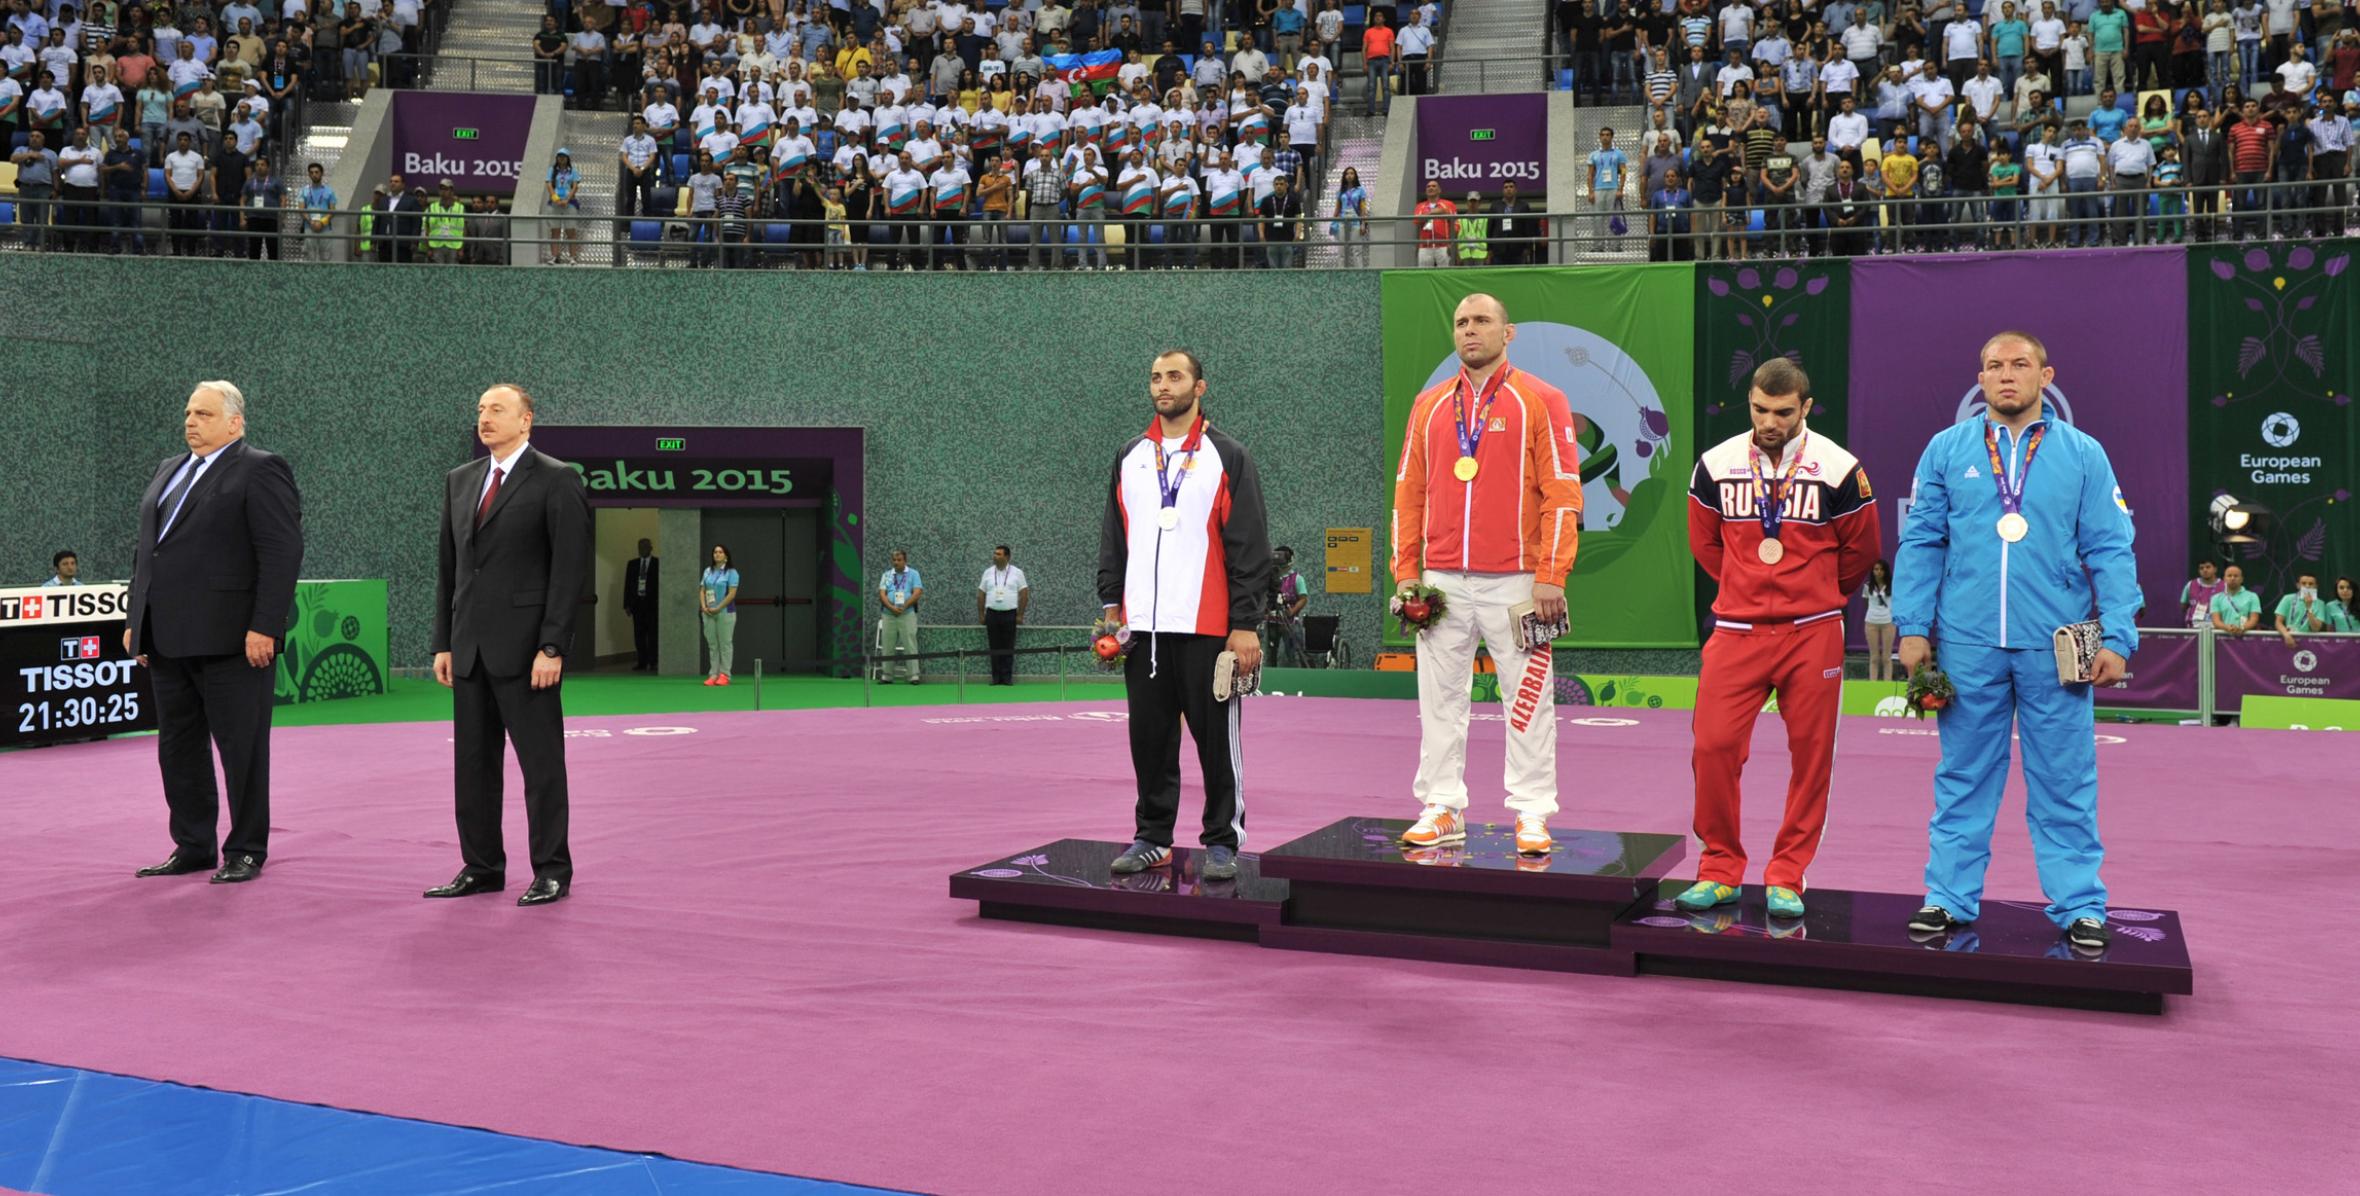 Ilham Aliyev presented the gold medal to the freestyle wrestler Khetag Gazyumov